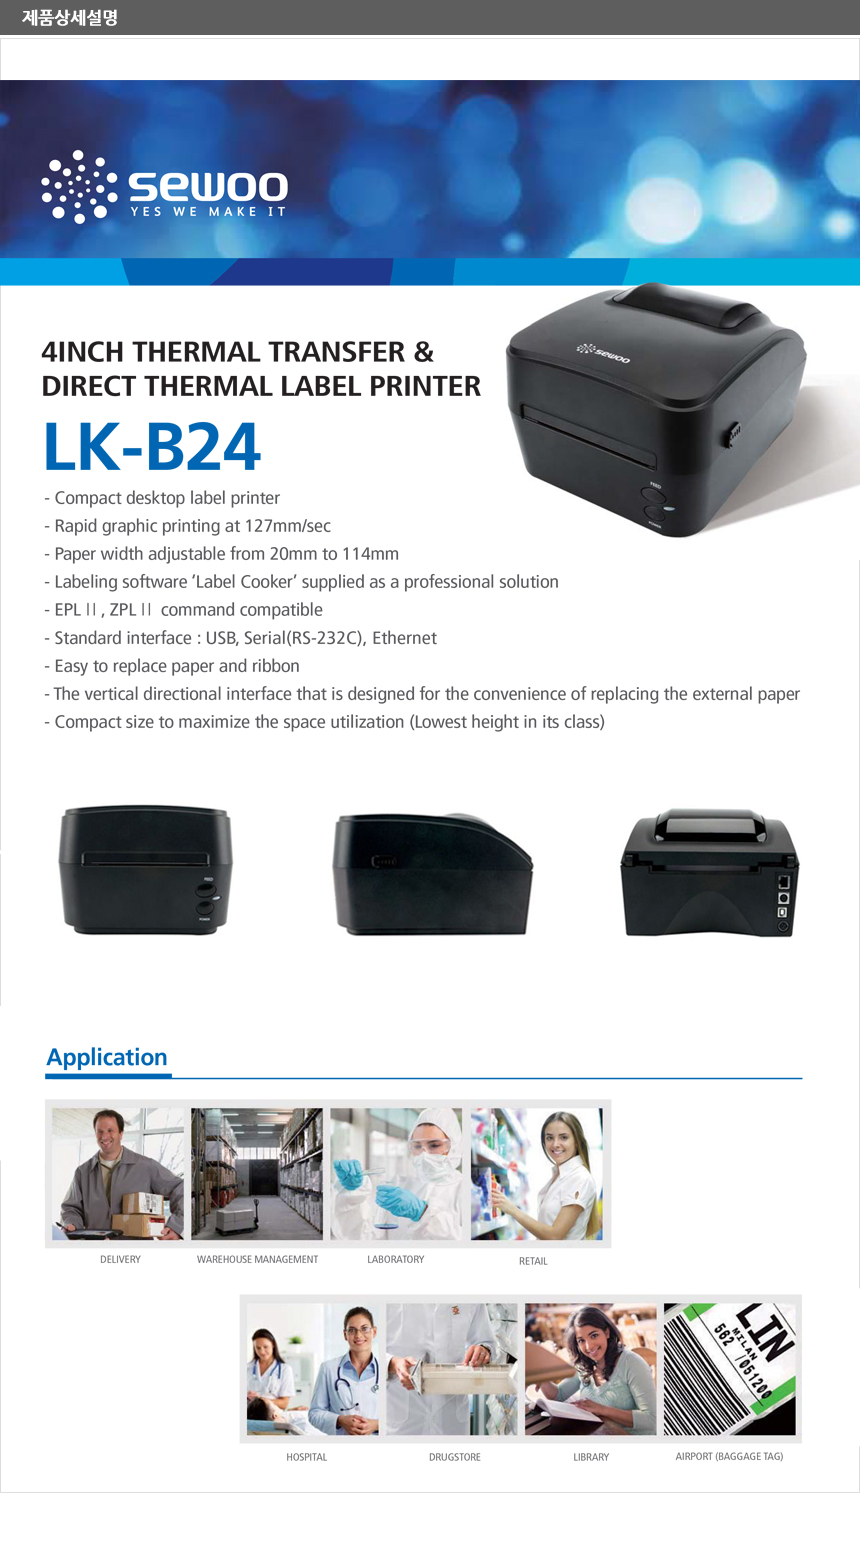 lk-b24 compact desktop label printer compact desktop label printer